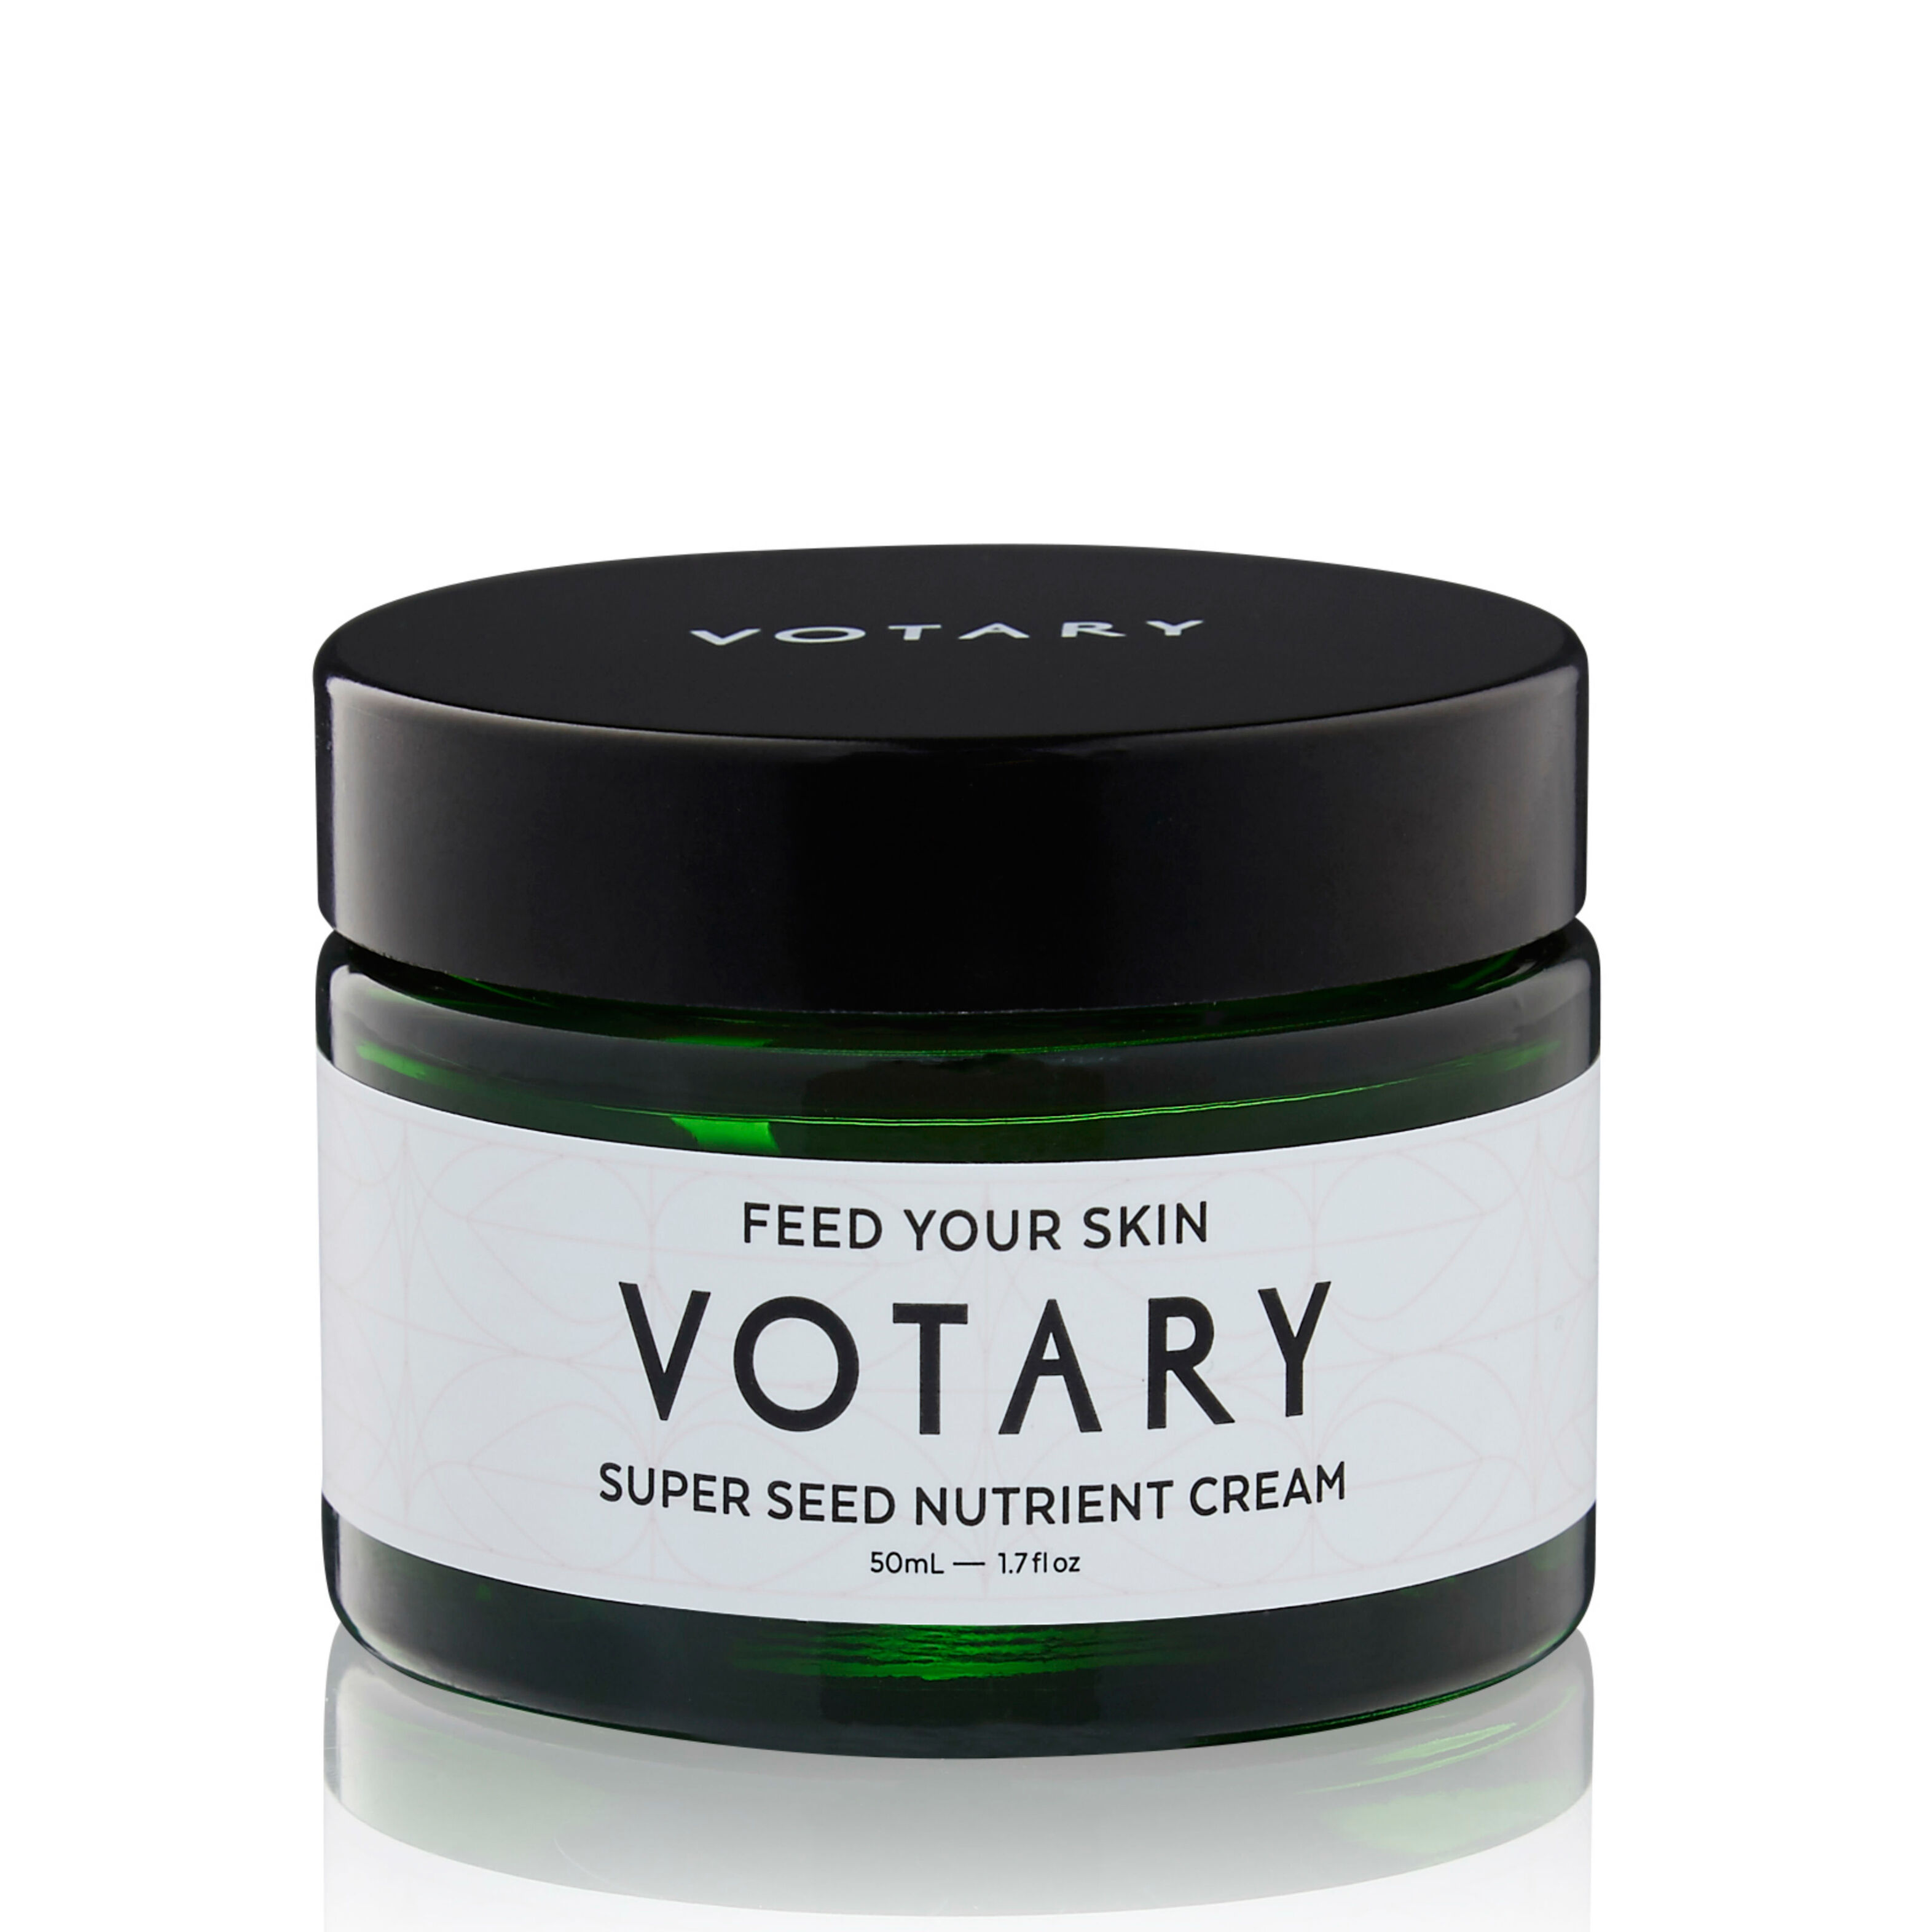 Votary - Super Seed Nutrient Cream